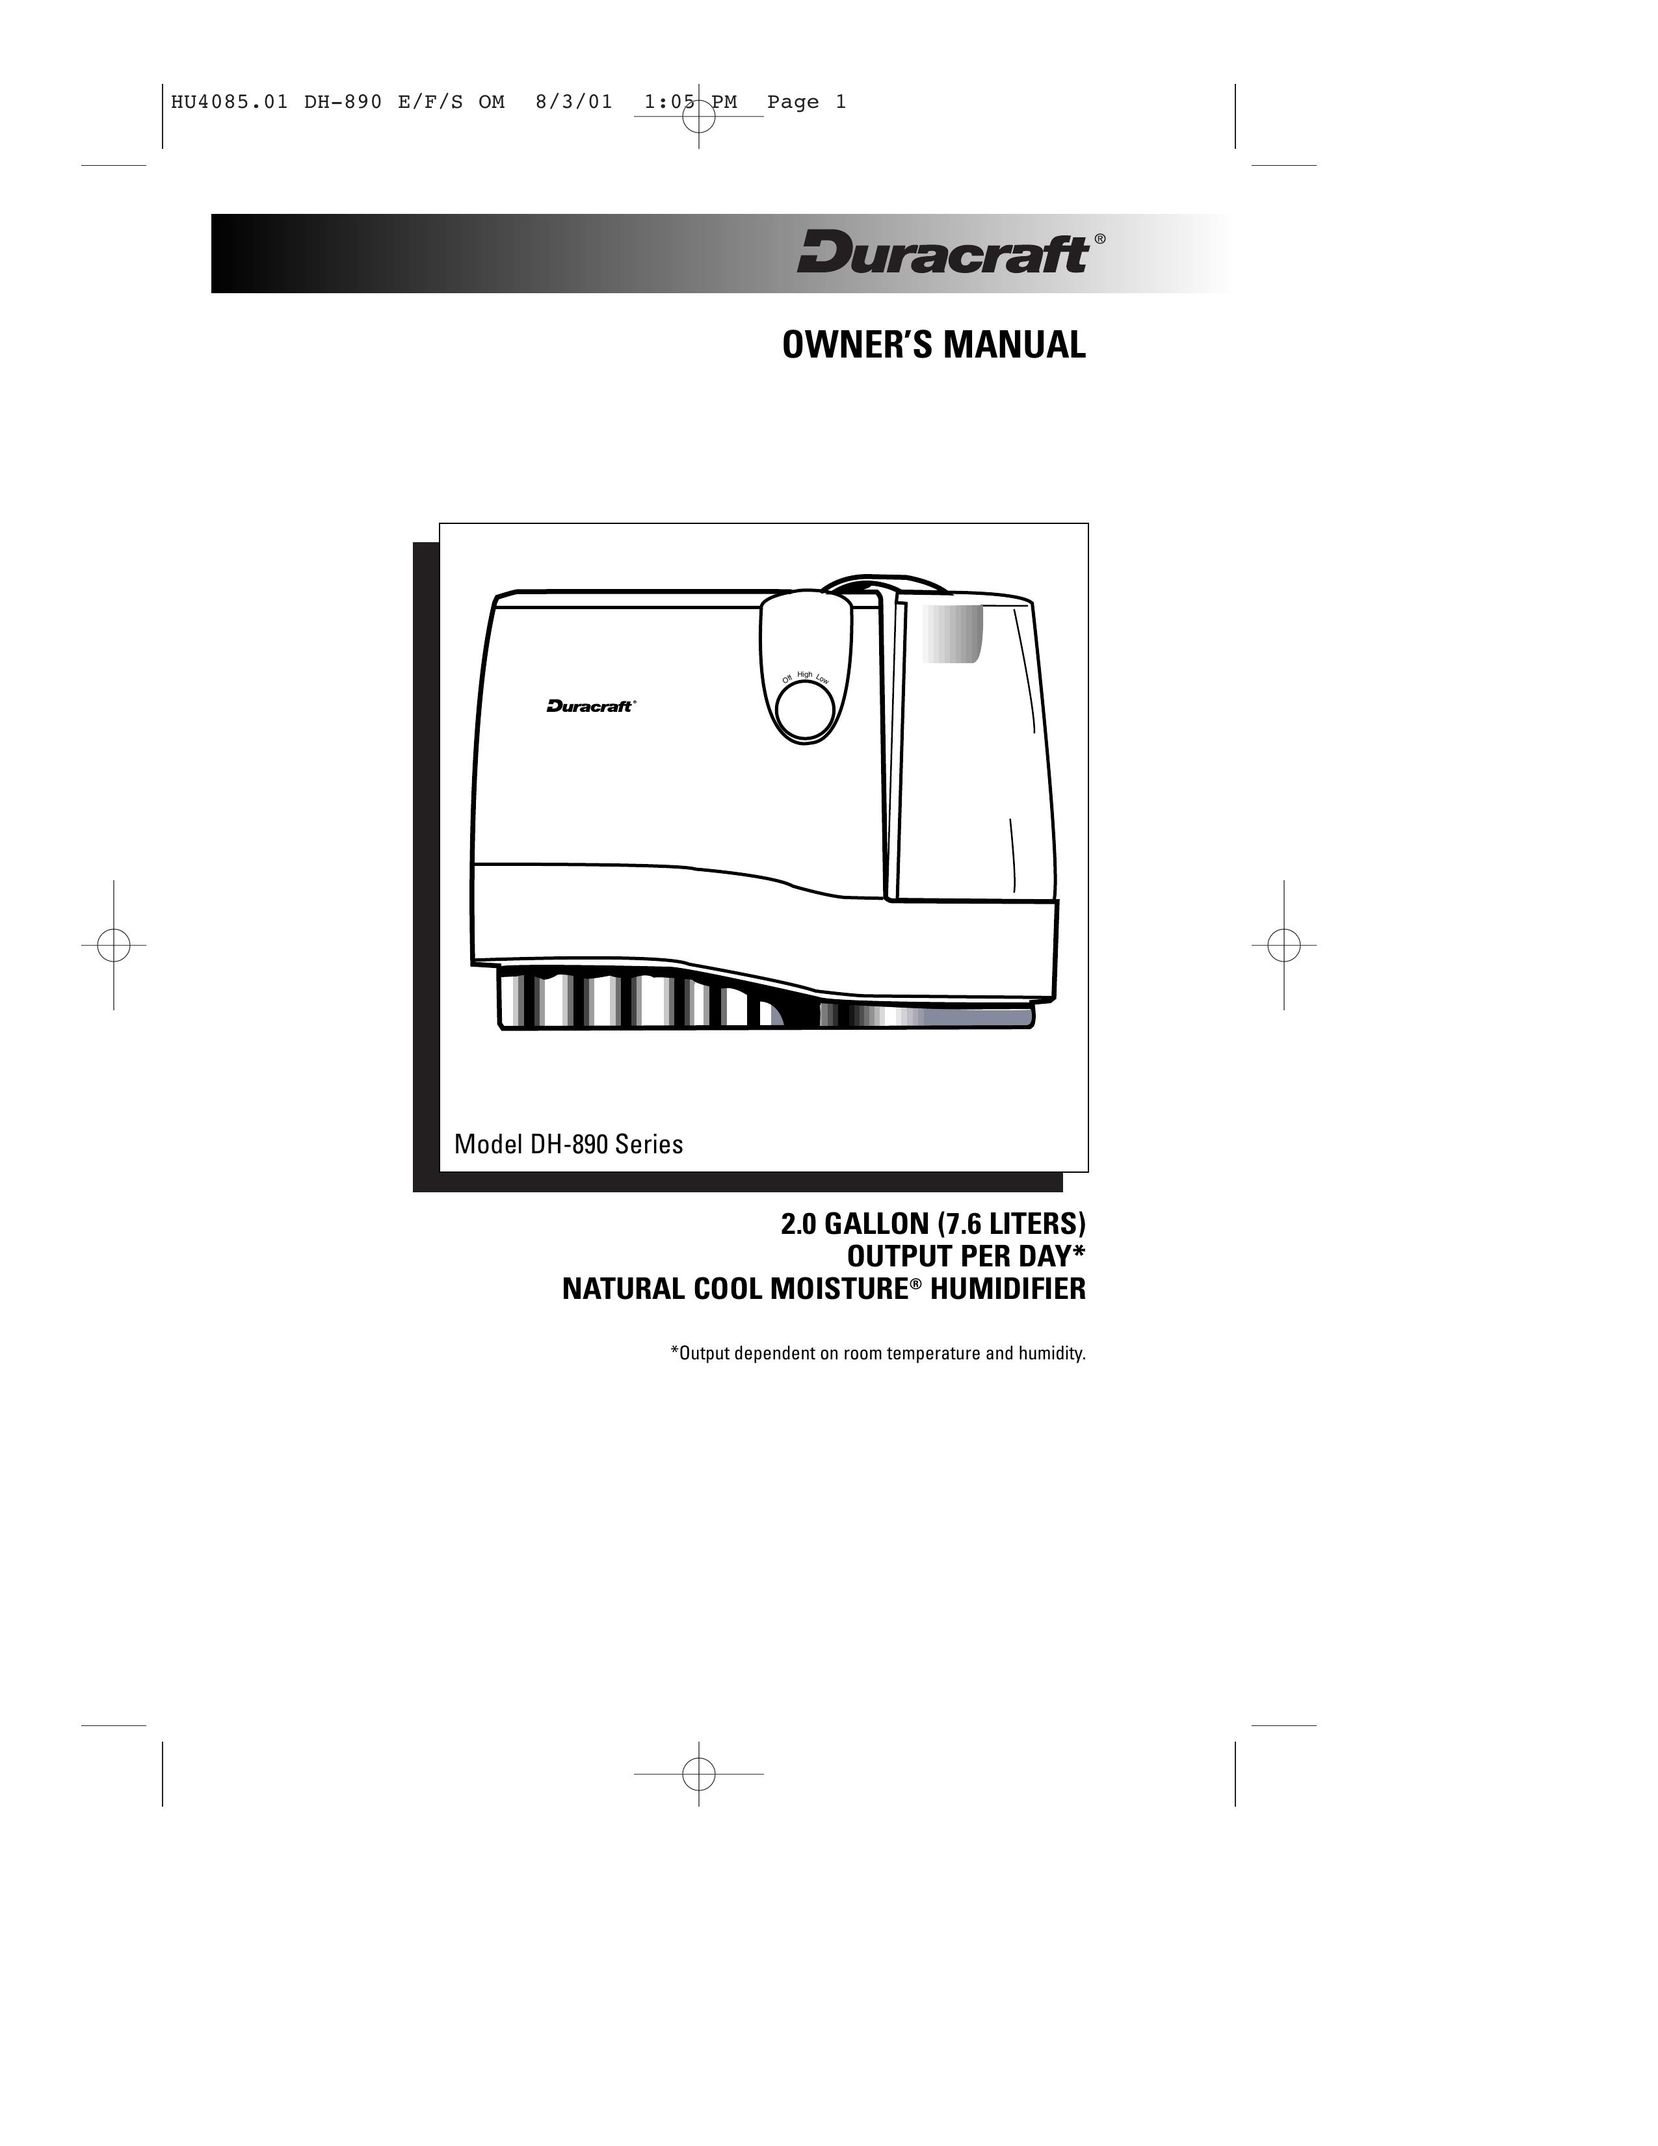 Duracraft DH-890 Humidifier User Manual